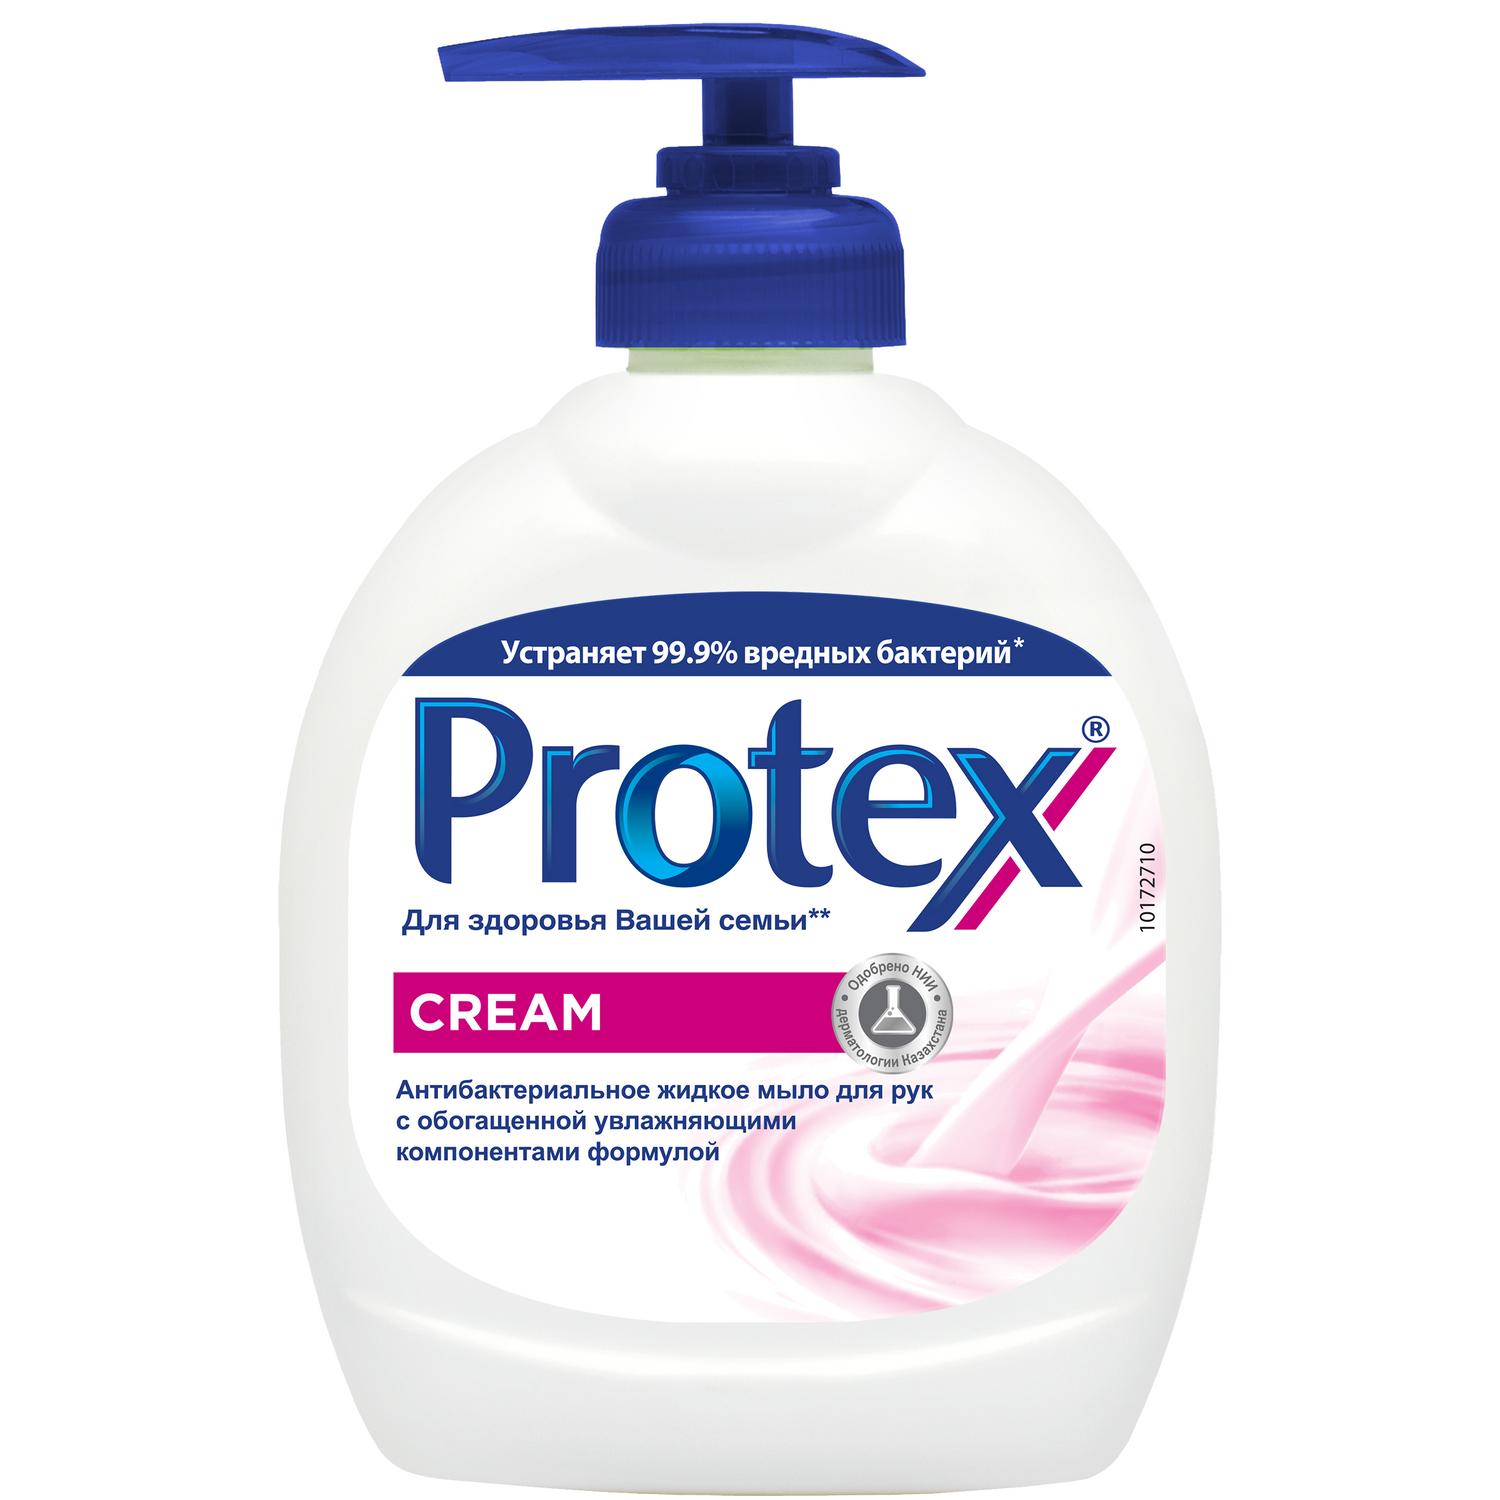 Protex Антибактериальное жидкое мыло для рук Cream, 300 мл мыло жидкое антибактериальное rain грейпфрут малина дозатор 500 мл